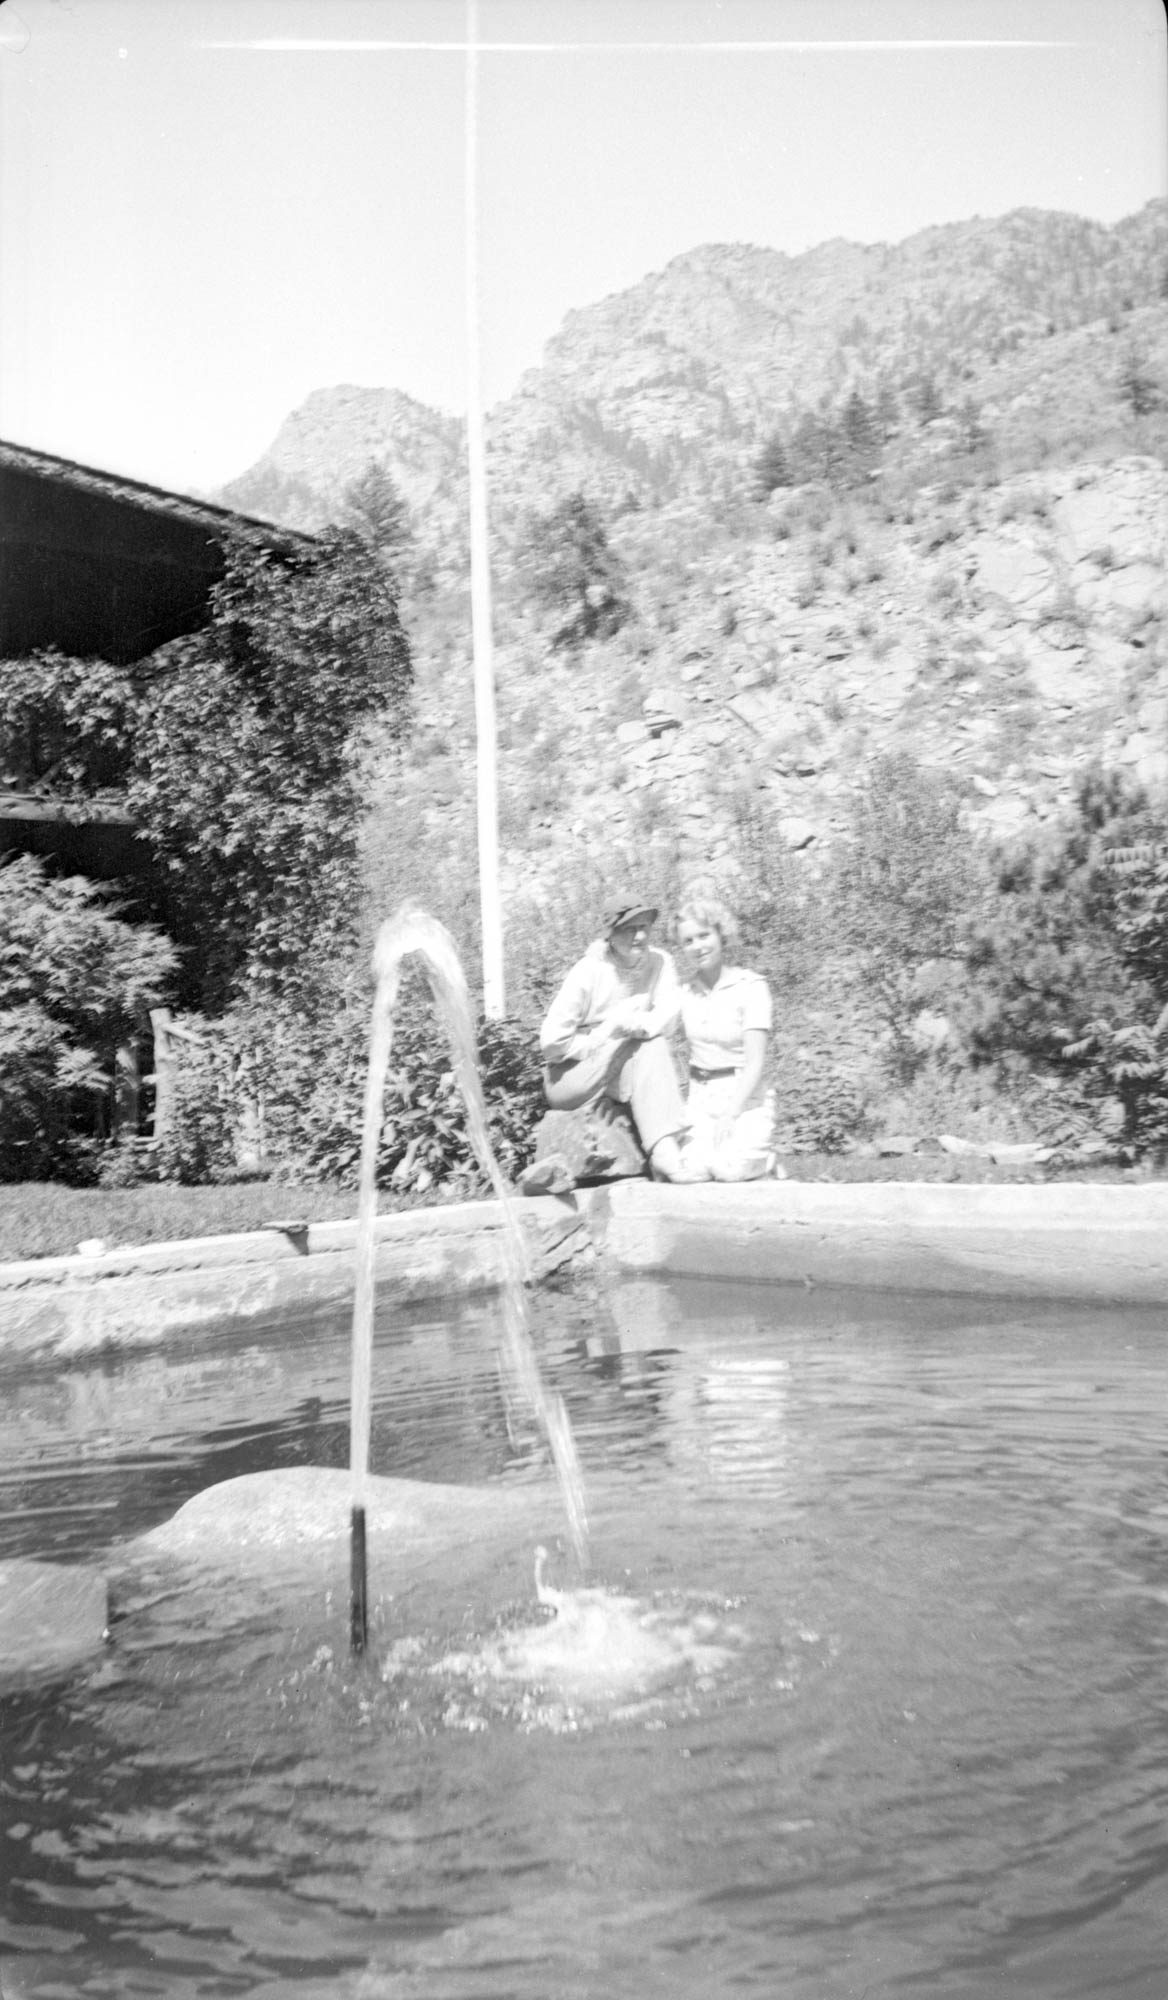 Idlewild Lodge - idlewildlodge.github.io - Circa 1930s - Anna Jeremiassen With Friend At Idlewild Pond